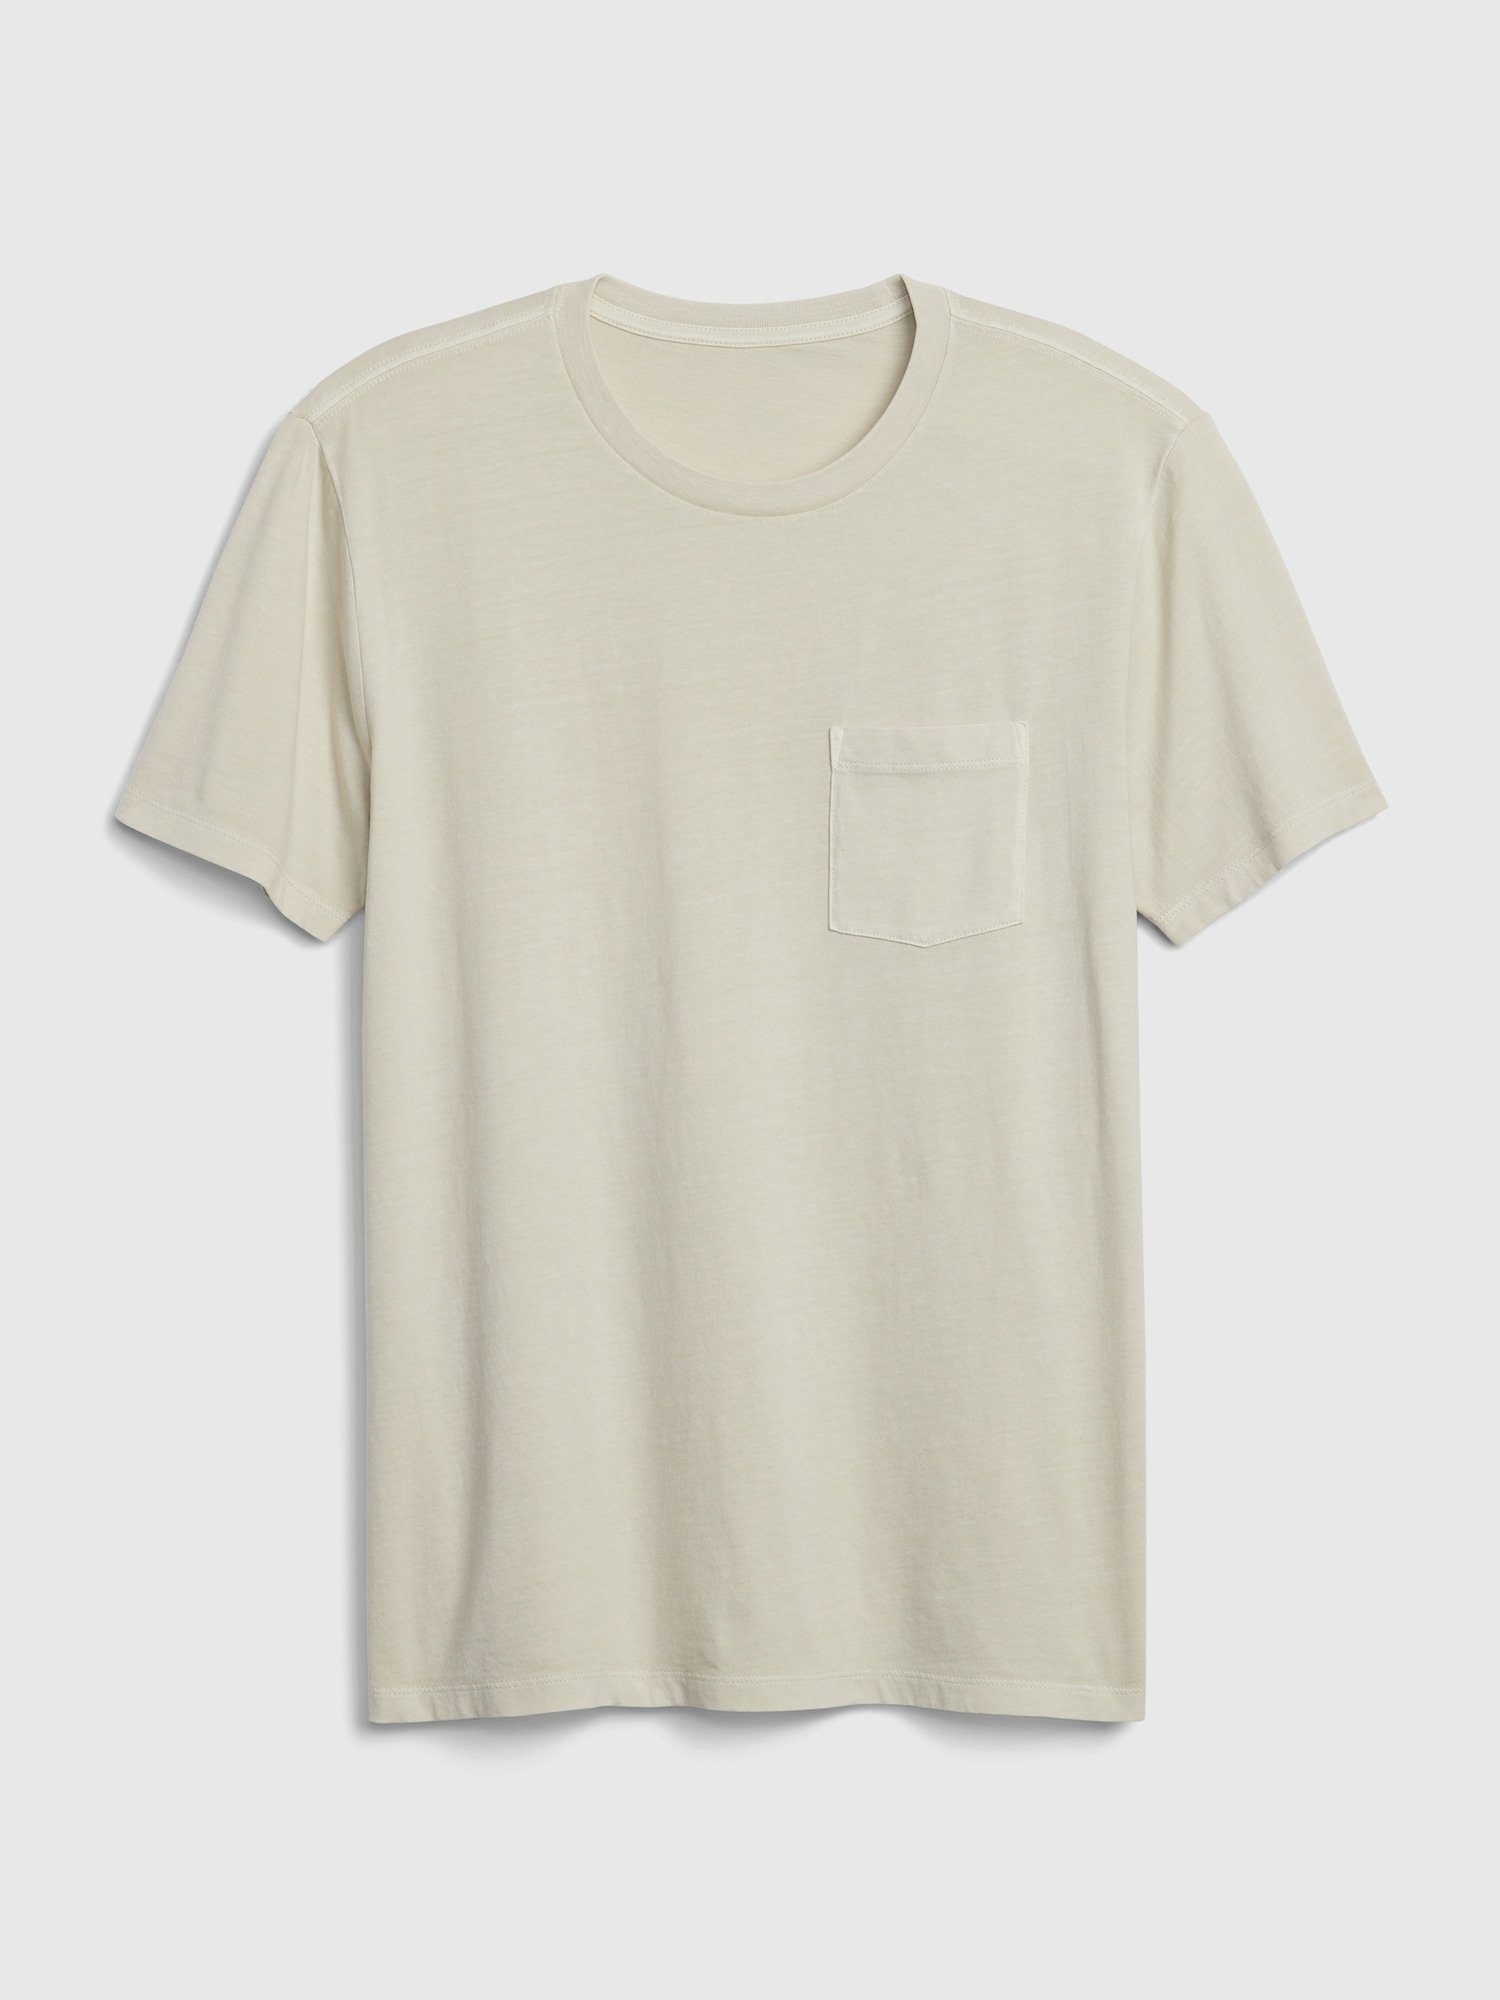 Vintage Cepli T-Shirt product image